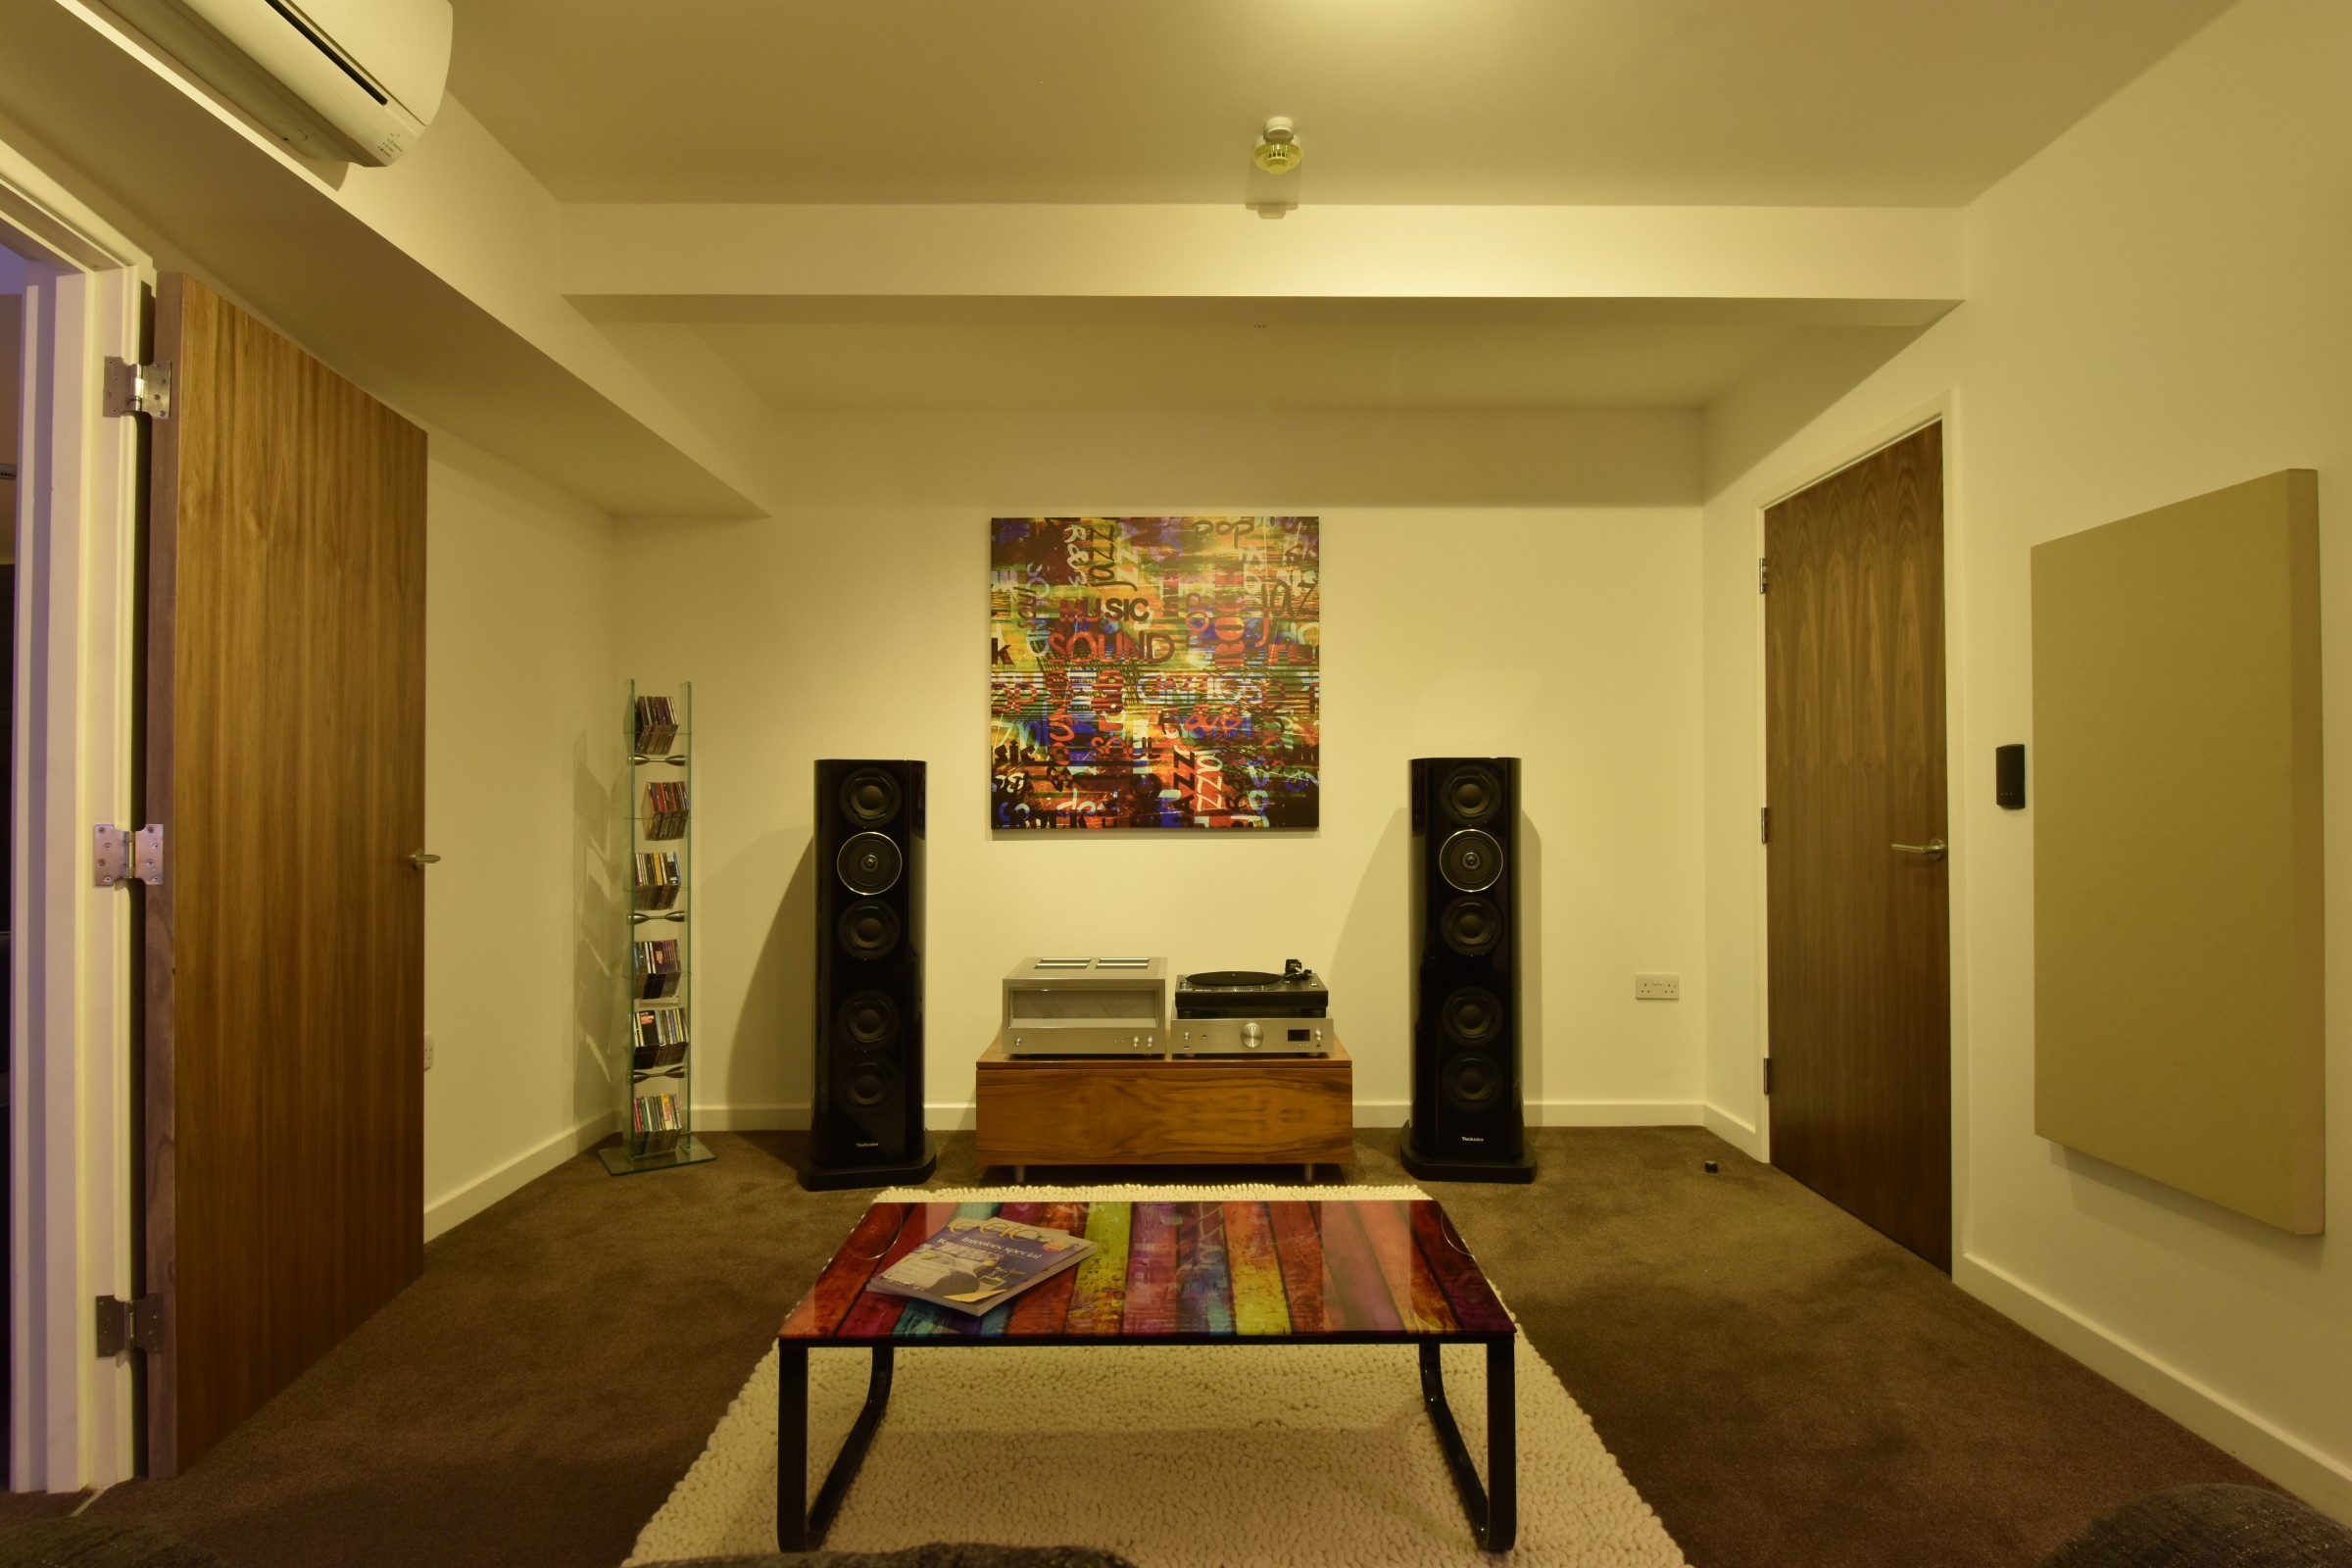 Media Room with audio hi-fi equipment including turntable, amplifier and floor-standing speakers